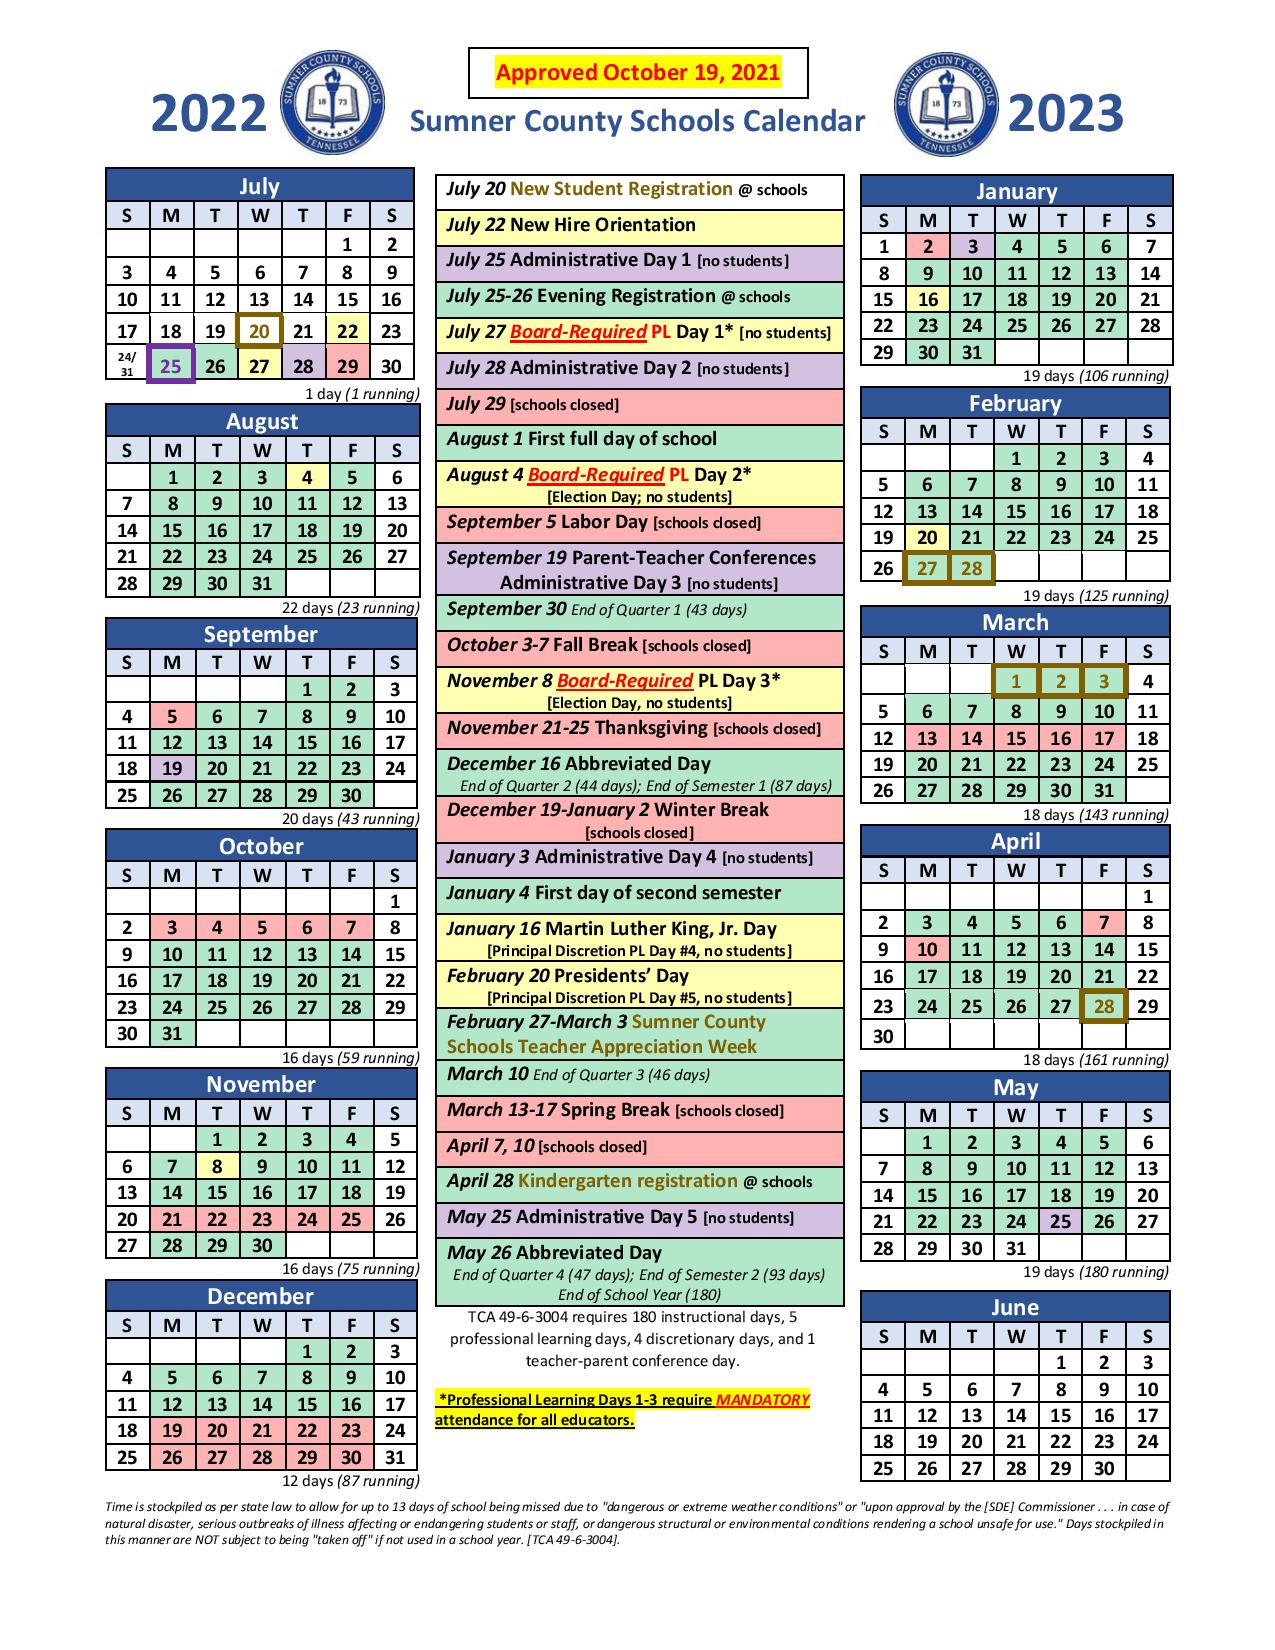 sumner-county-school-calendar-holidays-2022-2023